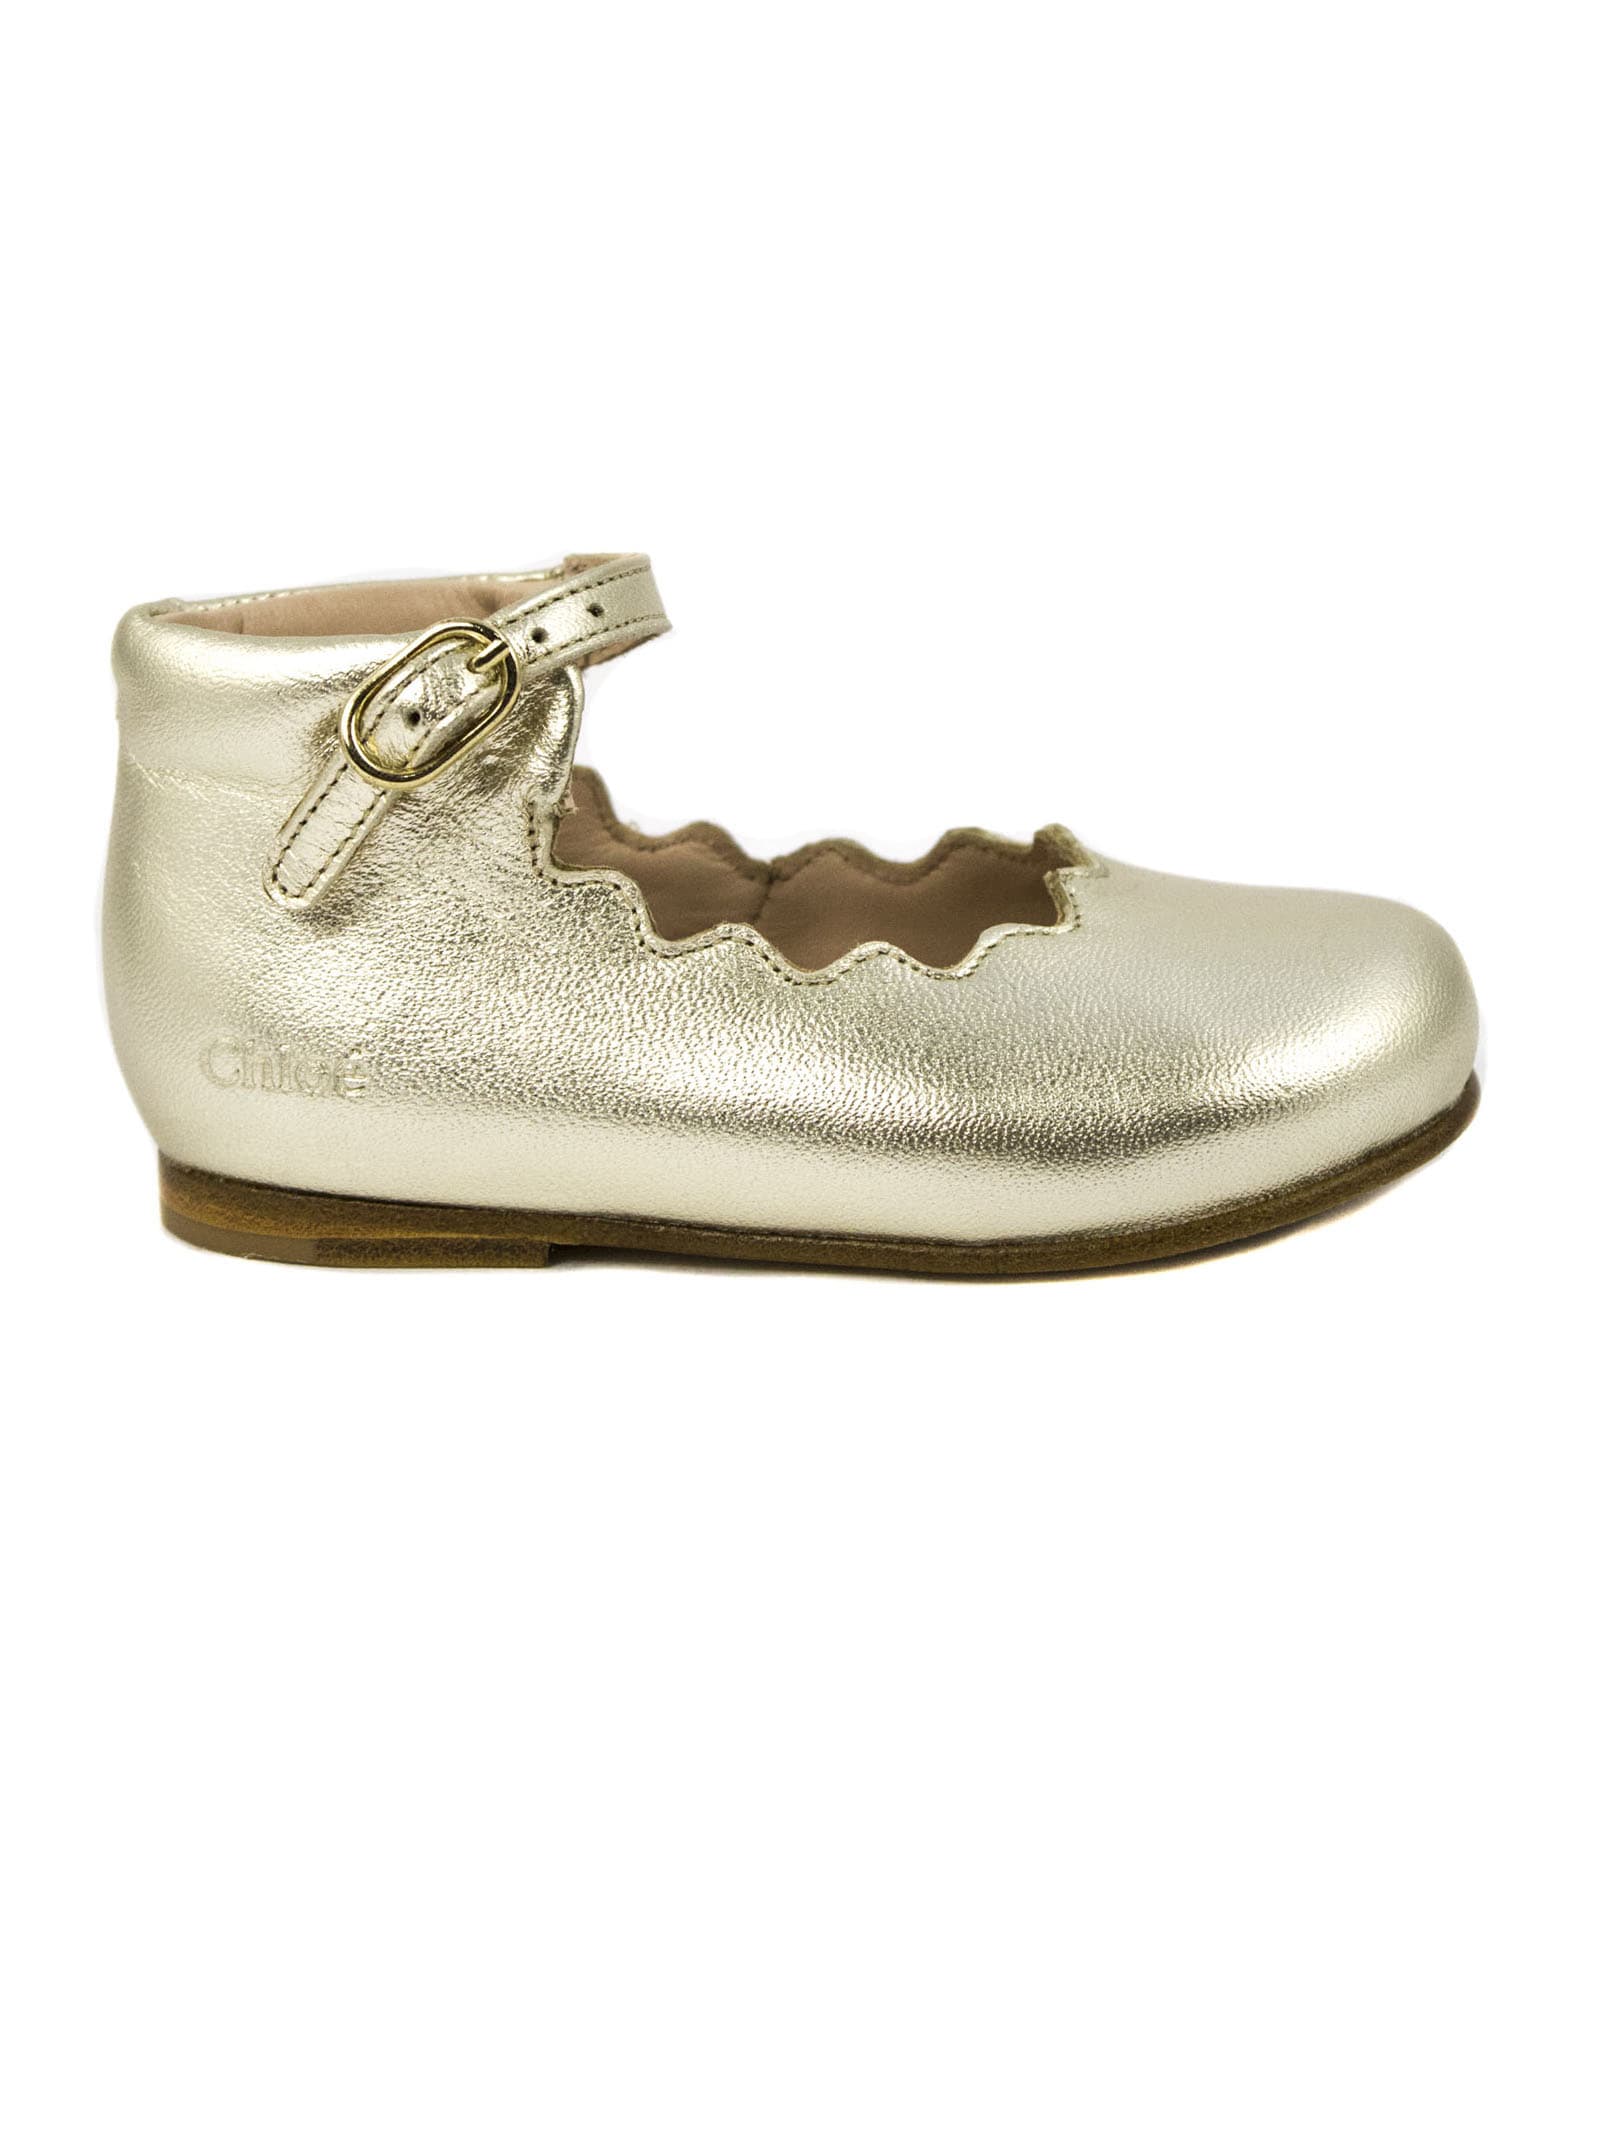 Chloé Gold Lauren Ballerina Shoes